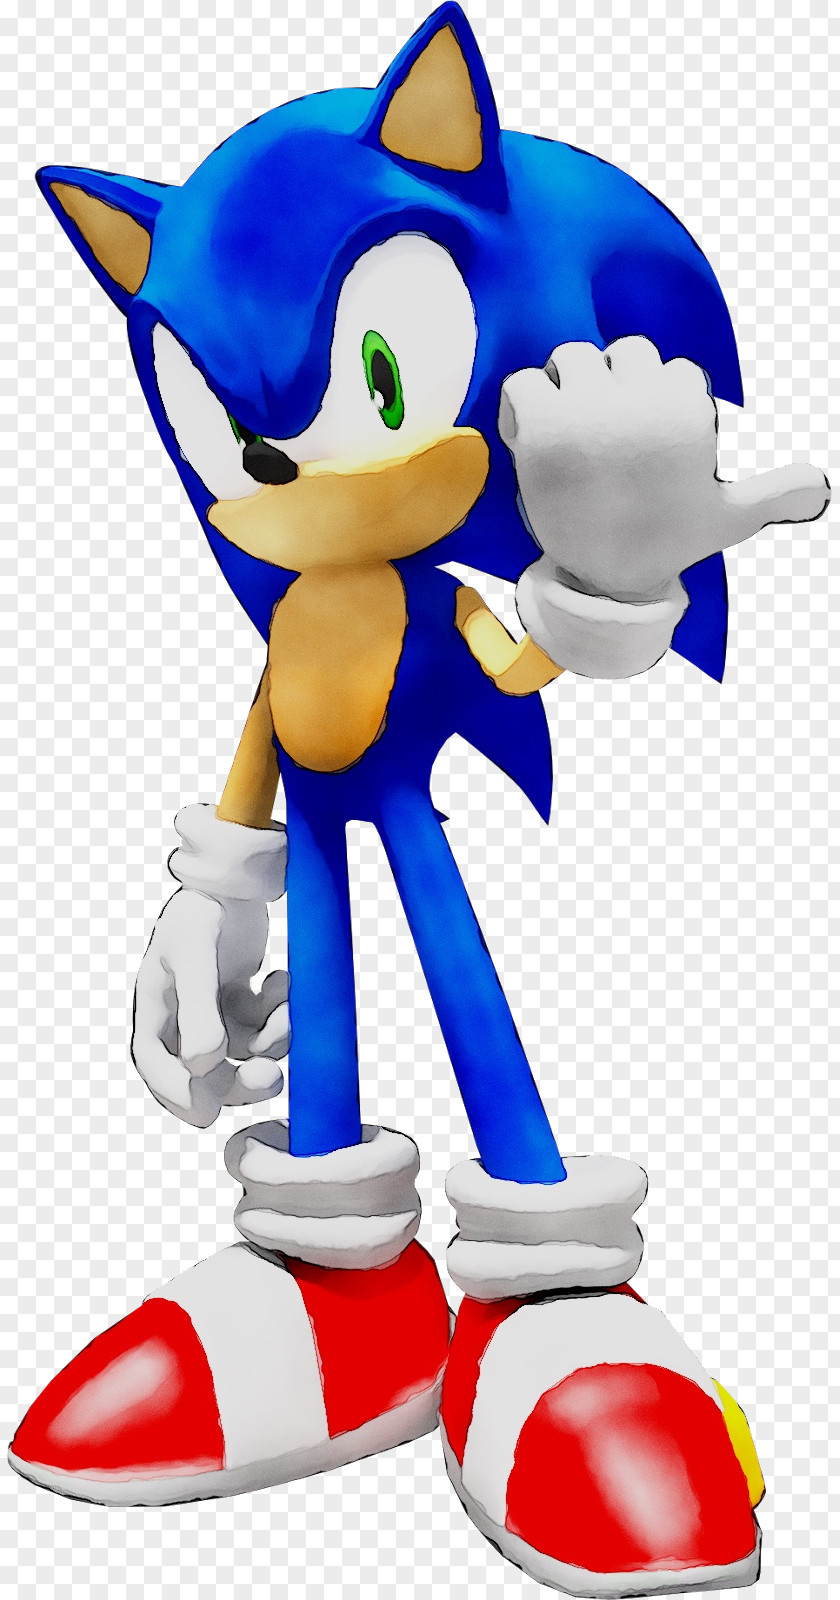 Sonic The Hedgehog 2 4: Episode II 3 PNG